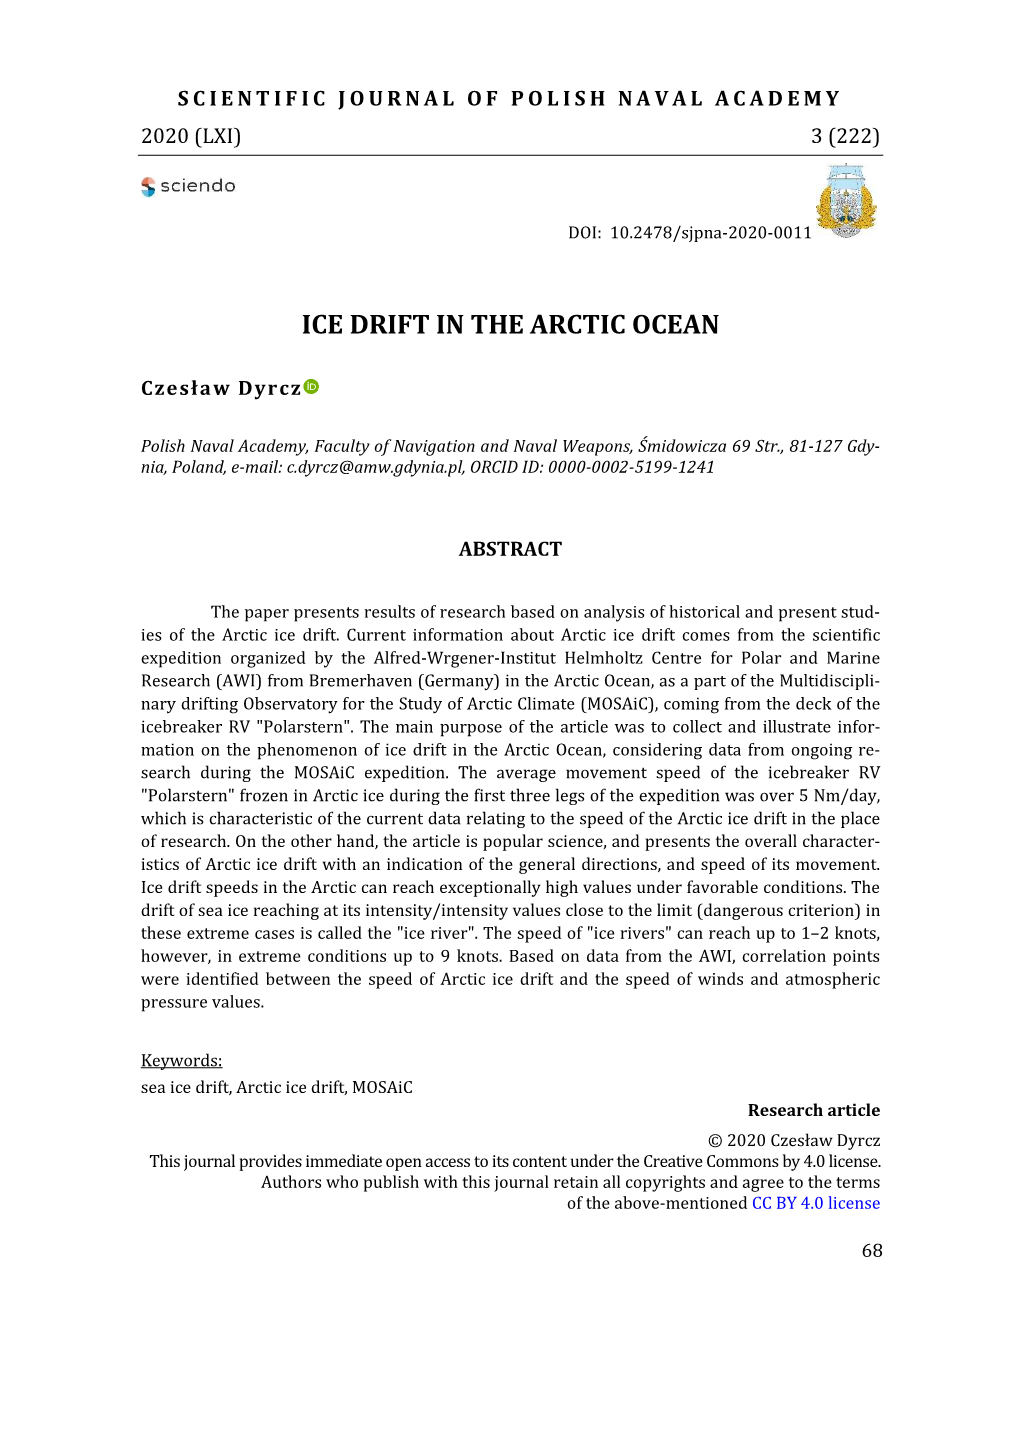 Ice Drift in the Arctic Ocean